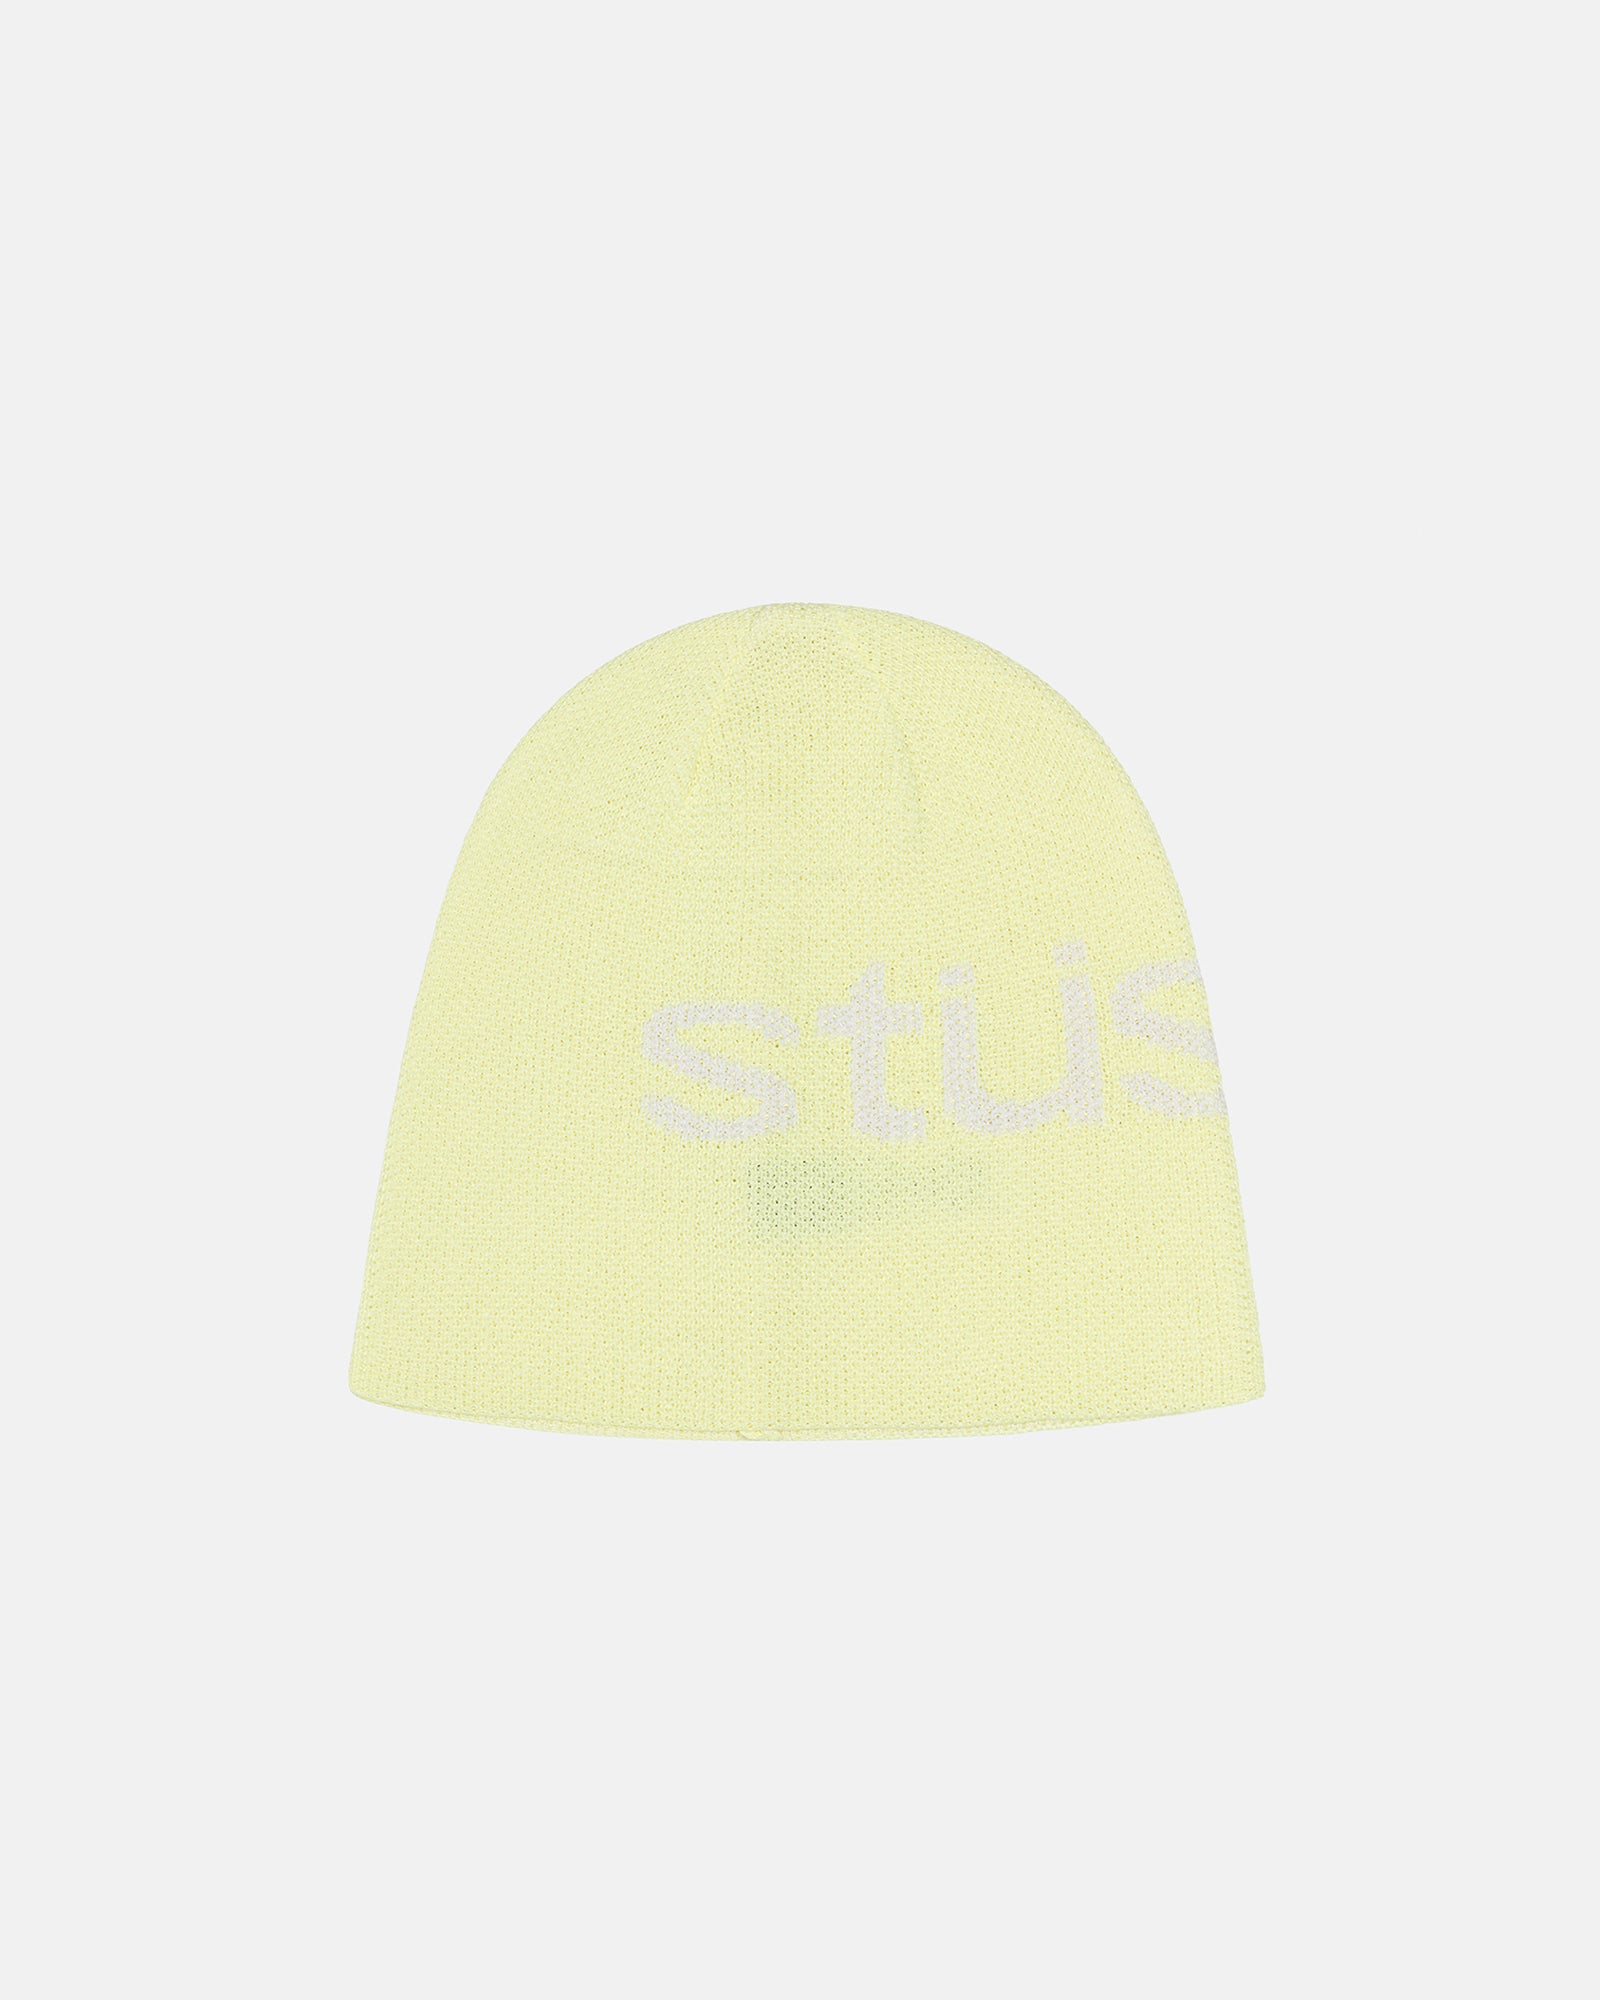 Stüssy Skullcap Helvetica Uv Yellow Headwear